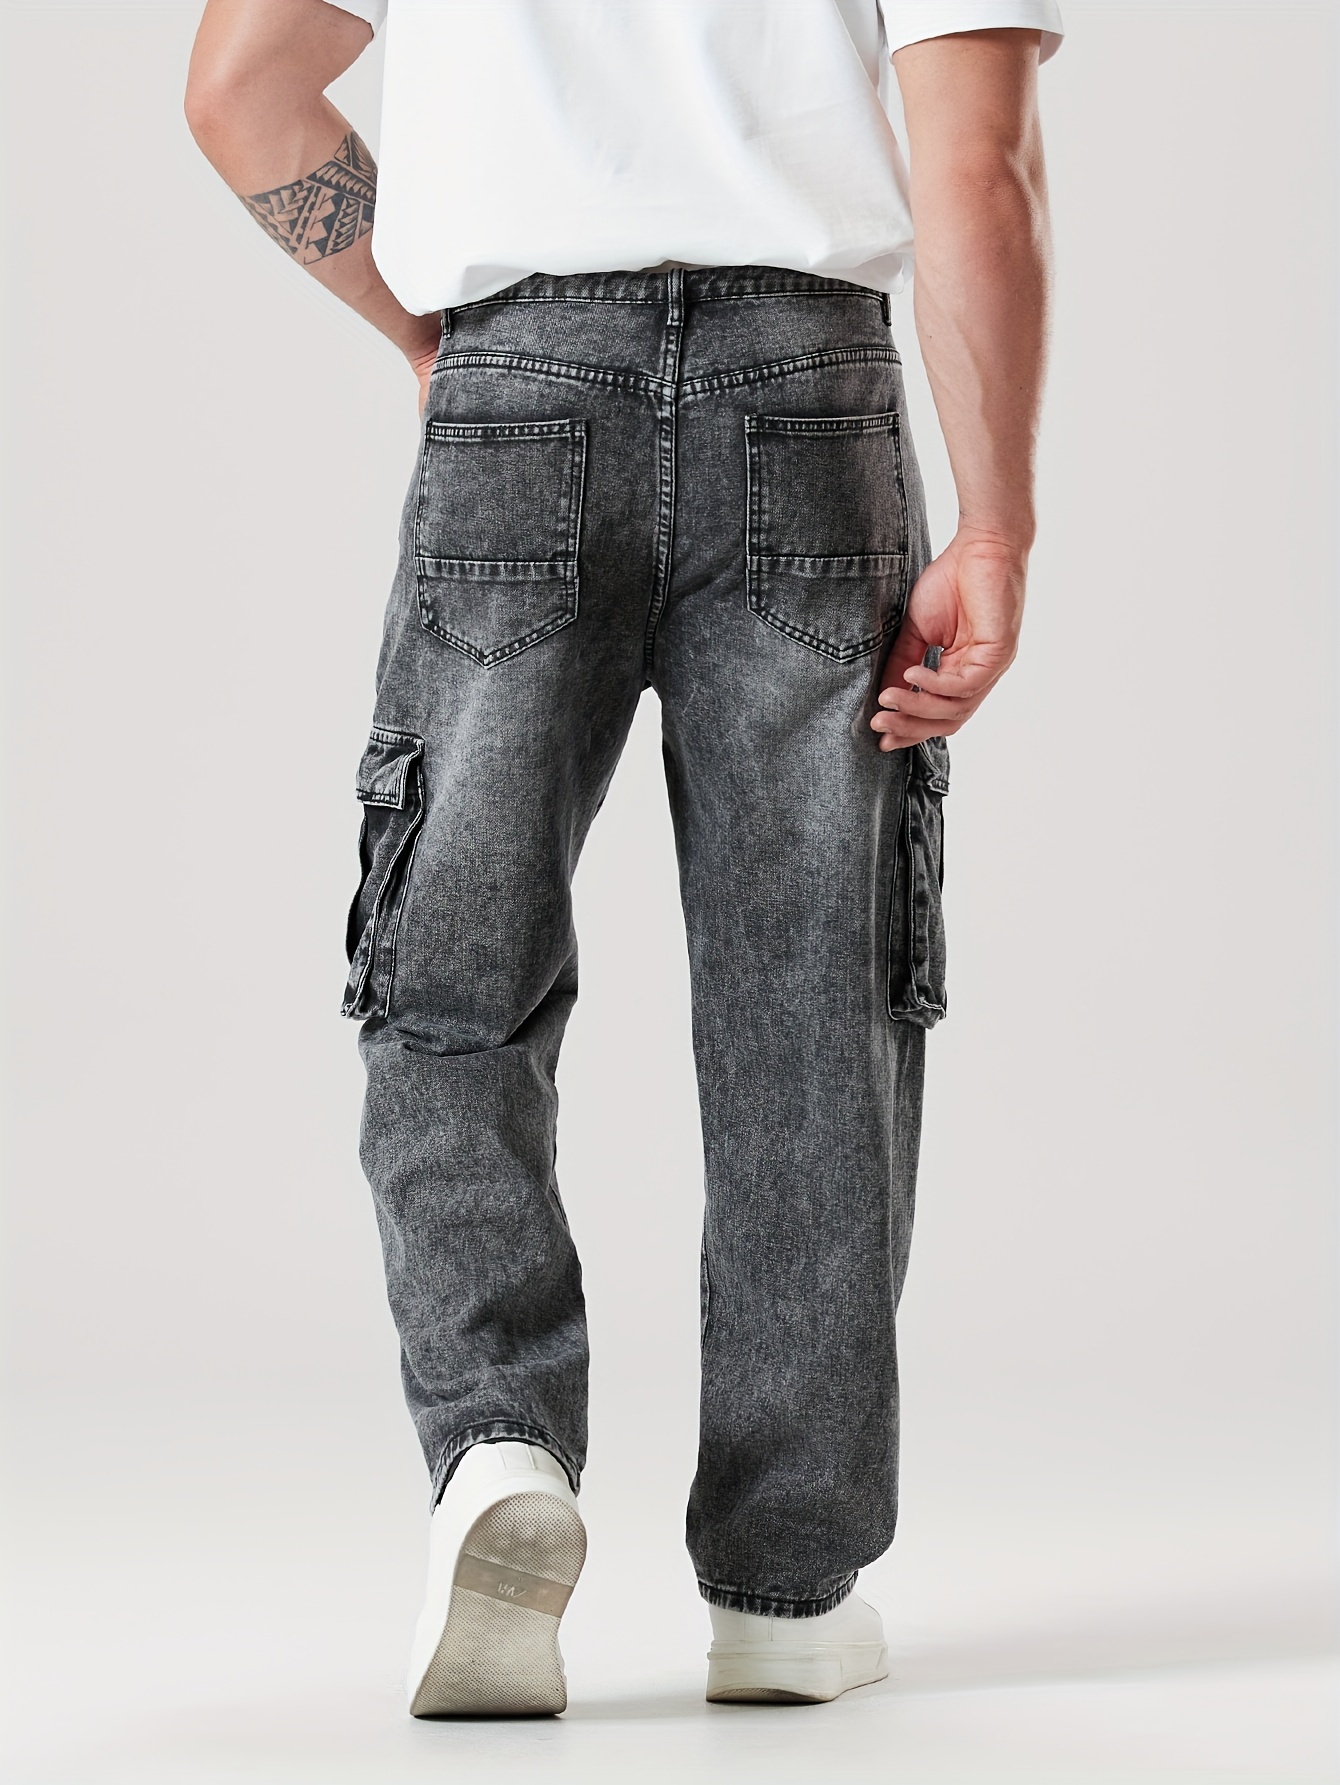 Plus Size Men's Oversized Denim Pants Street Style Baggy Jeans For Fall  Winter, Men's Clothing